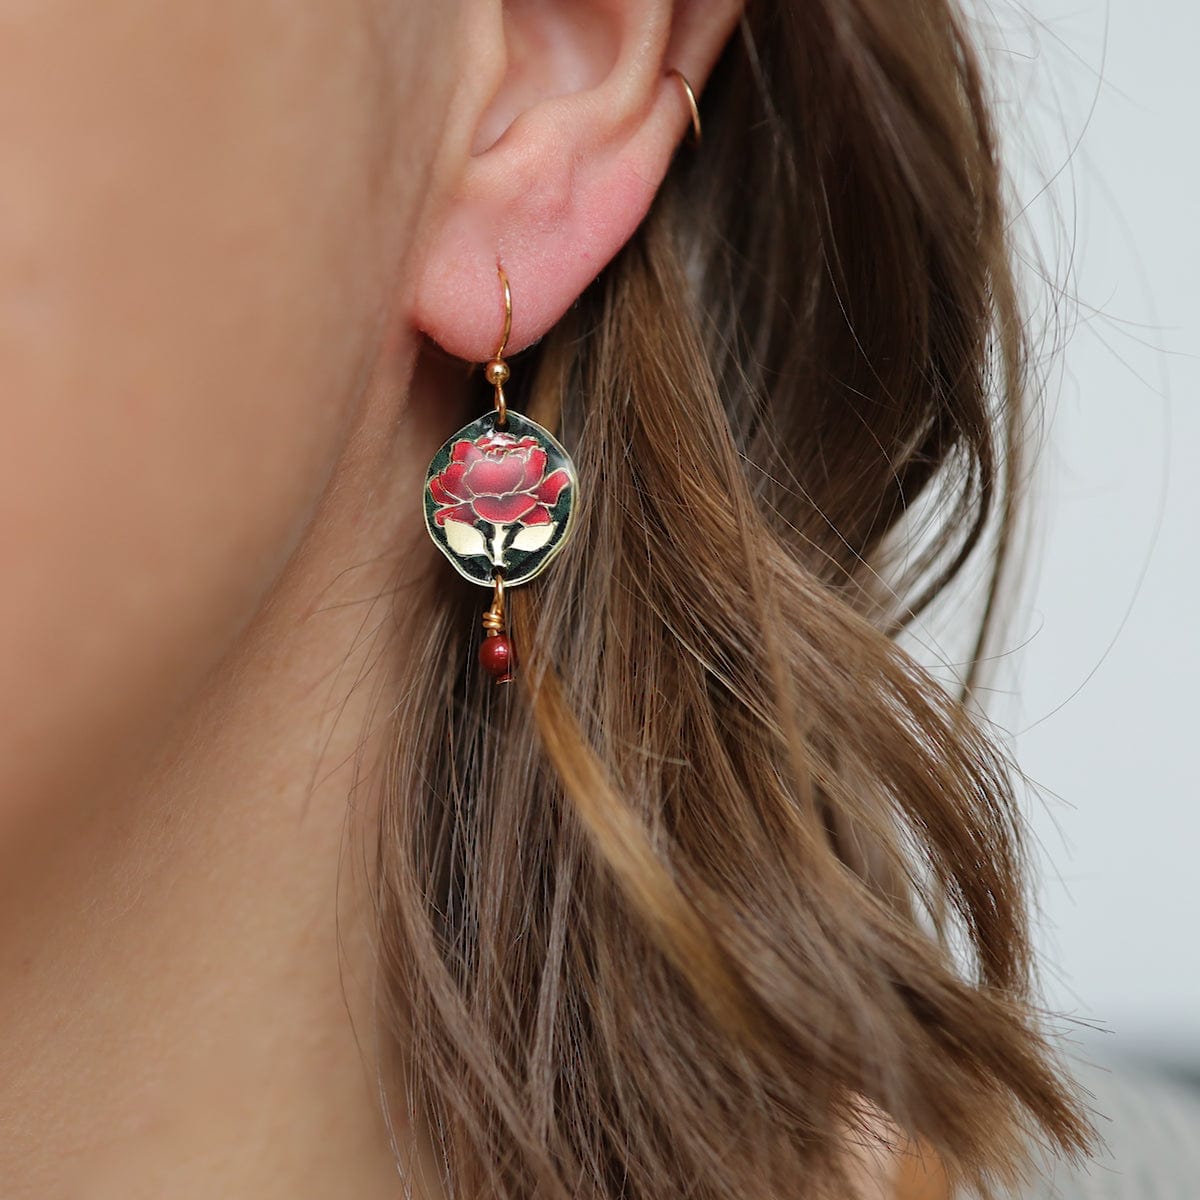 EAR-JM Gold Red Rose Earring  - Plated Surgical Steel Ear